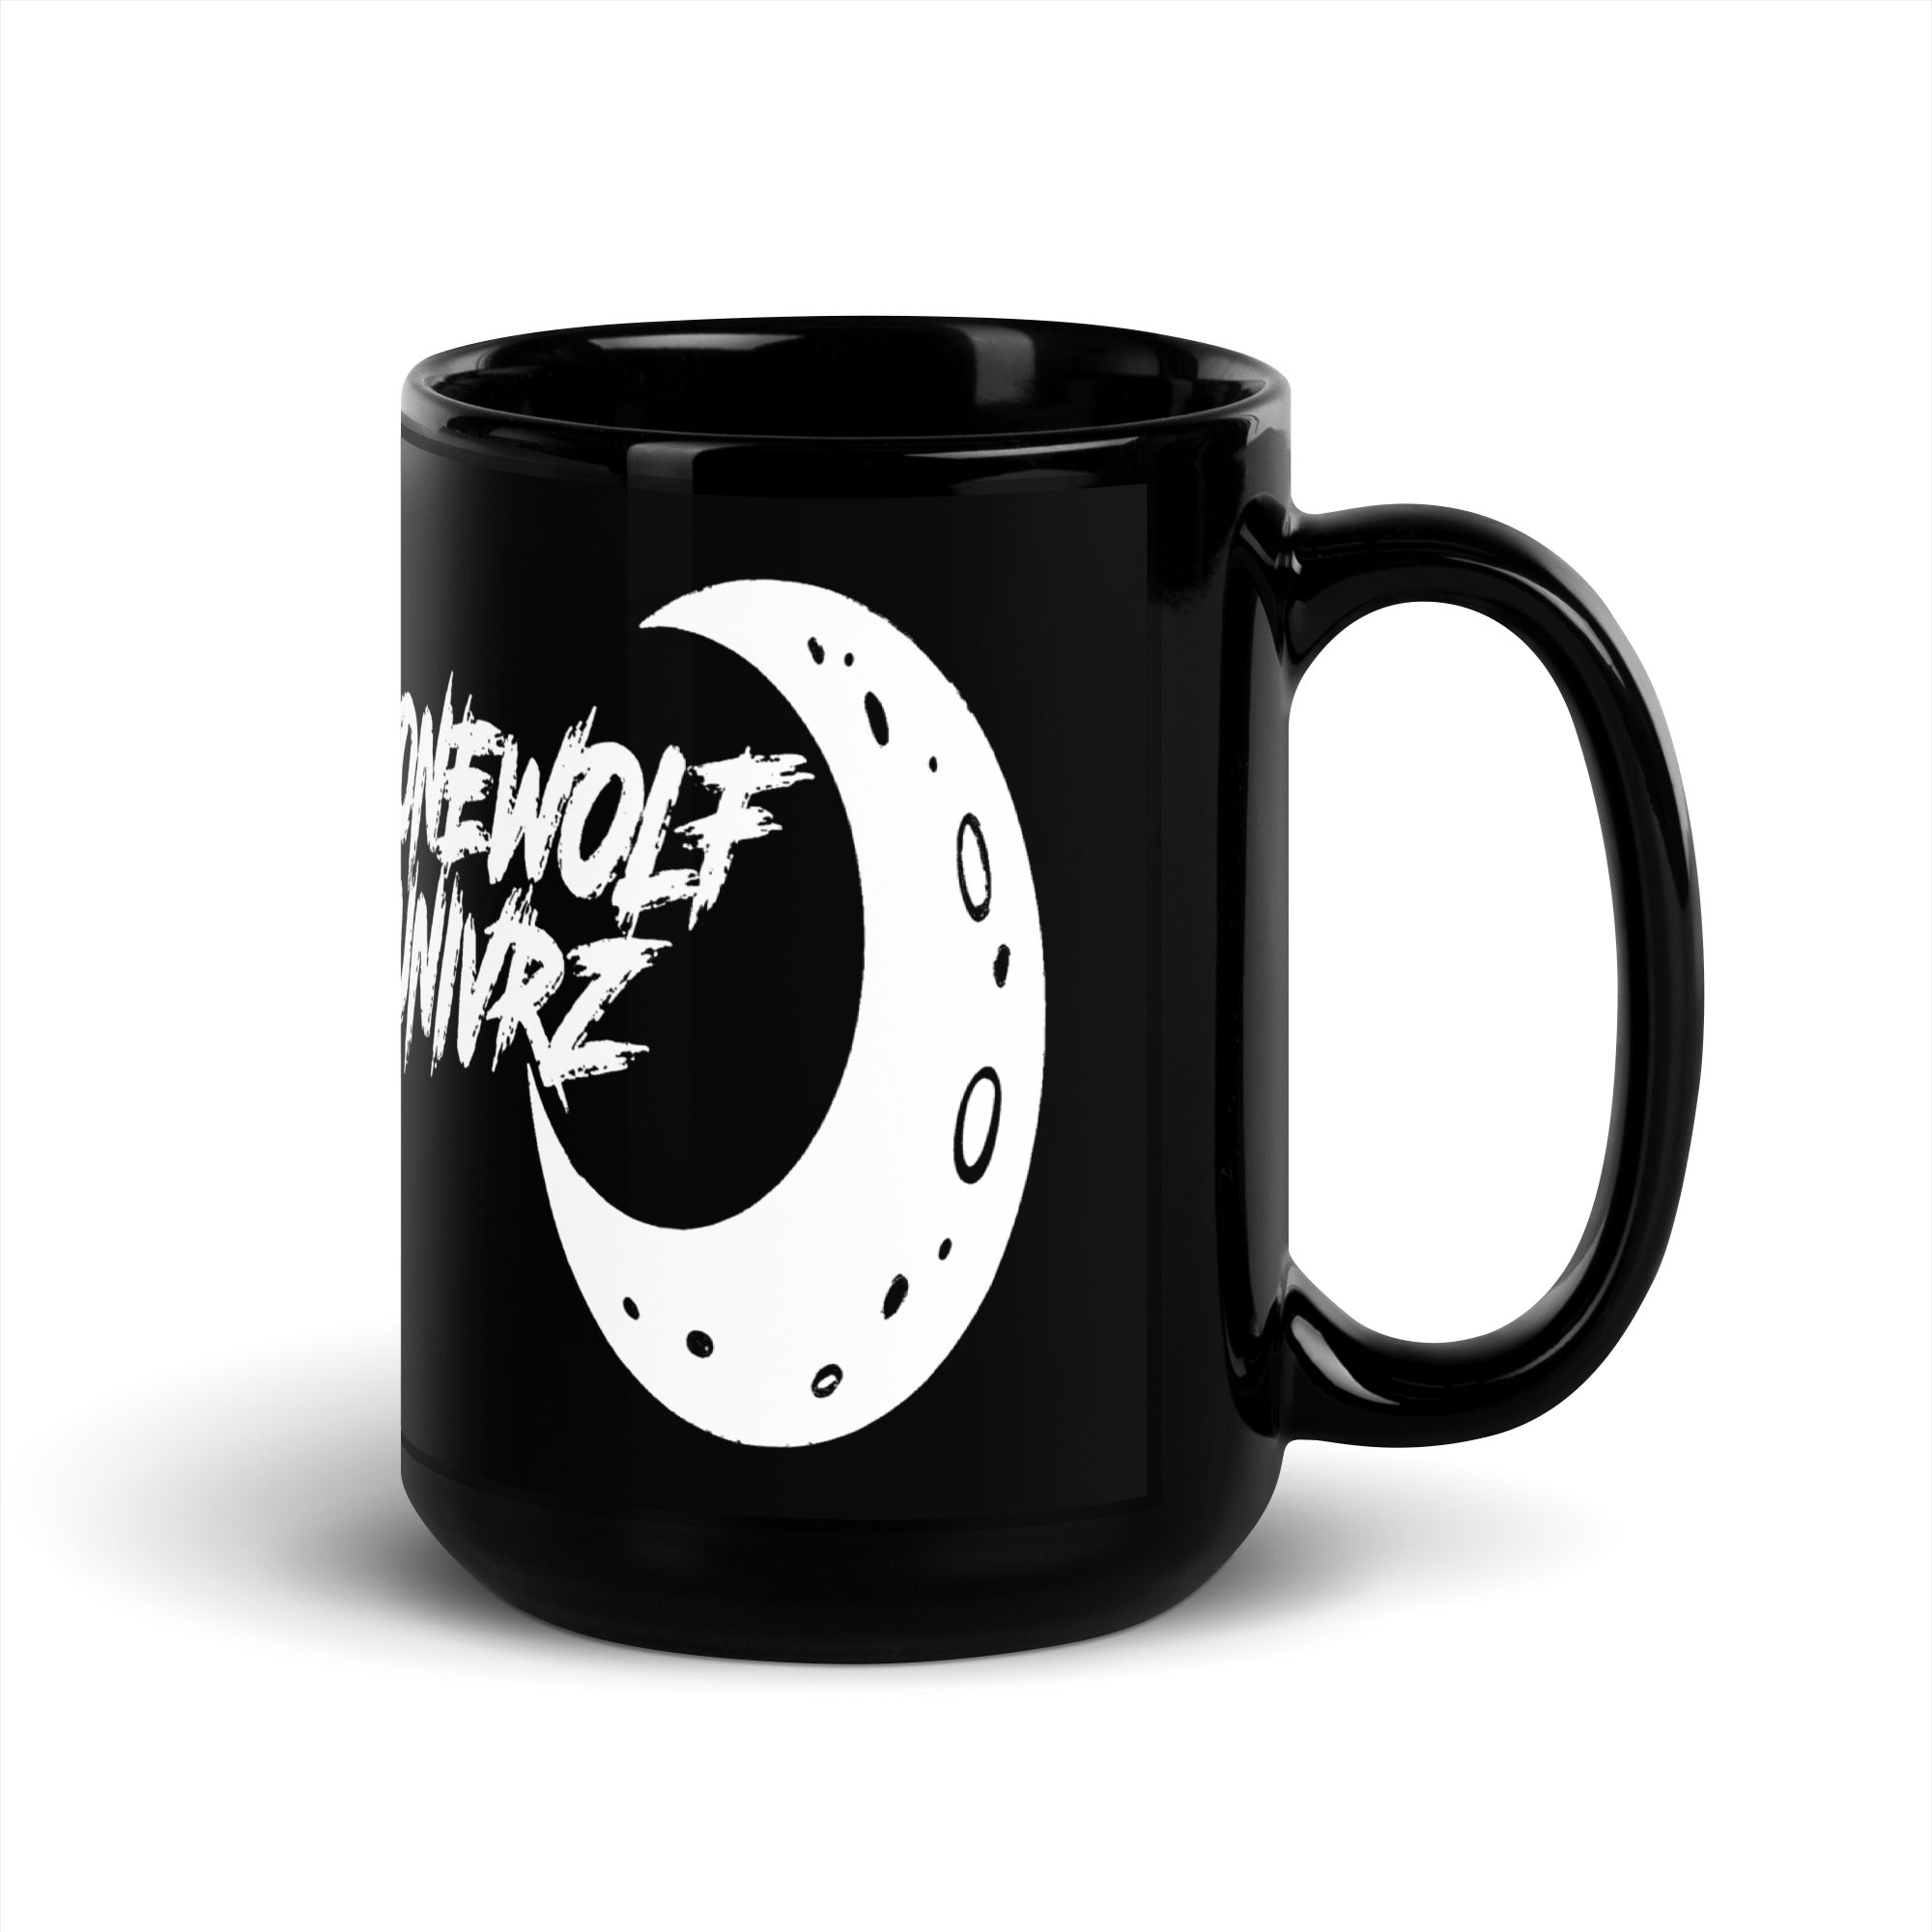 Lonewolf Univrz - Glossy Mug